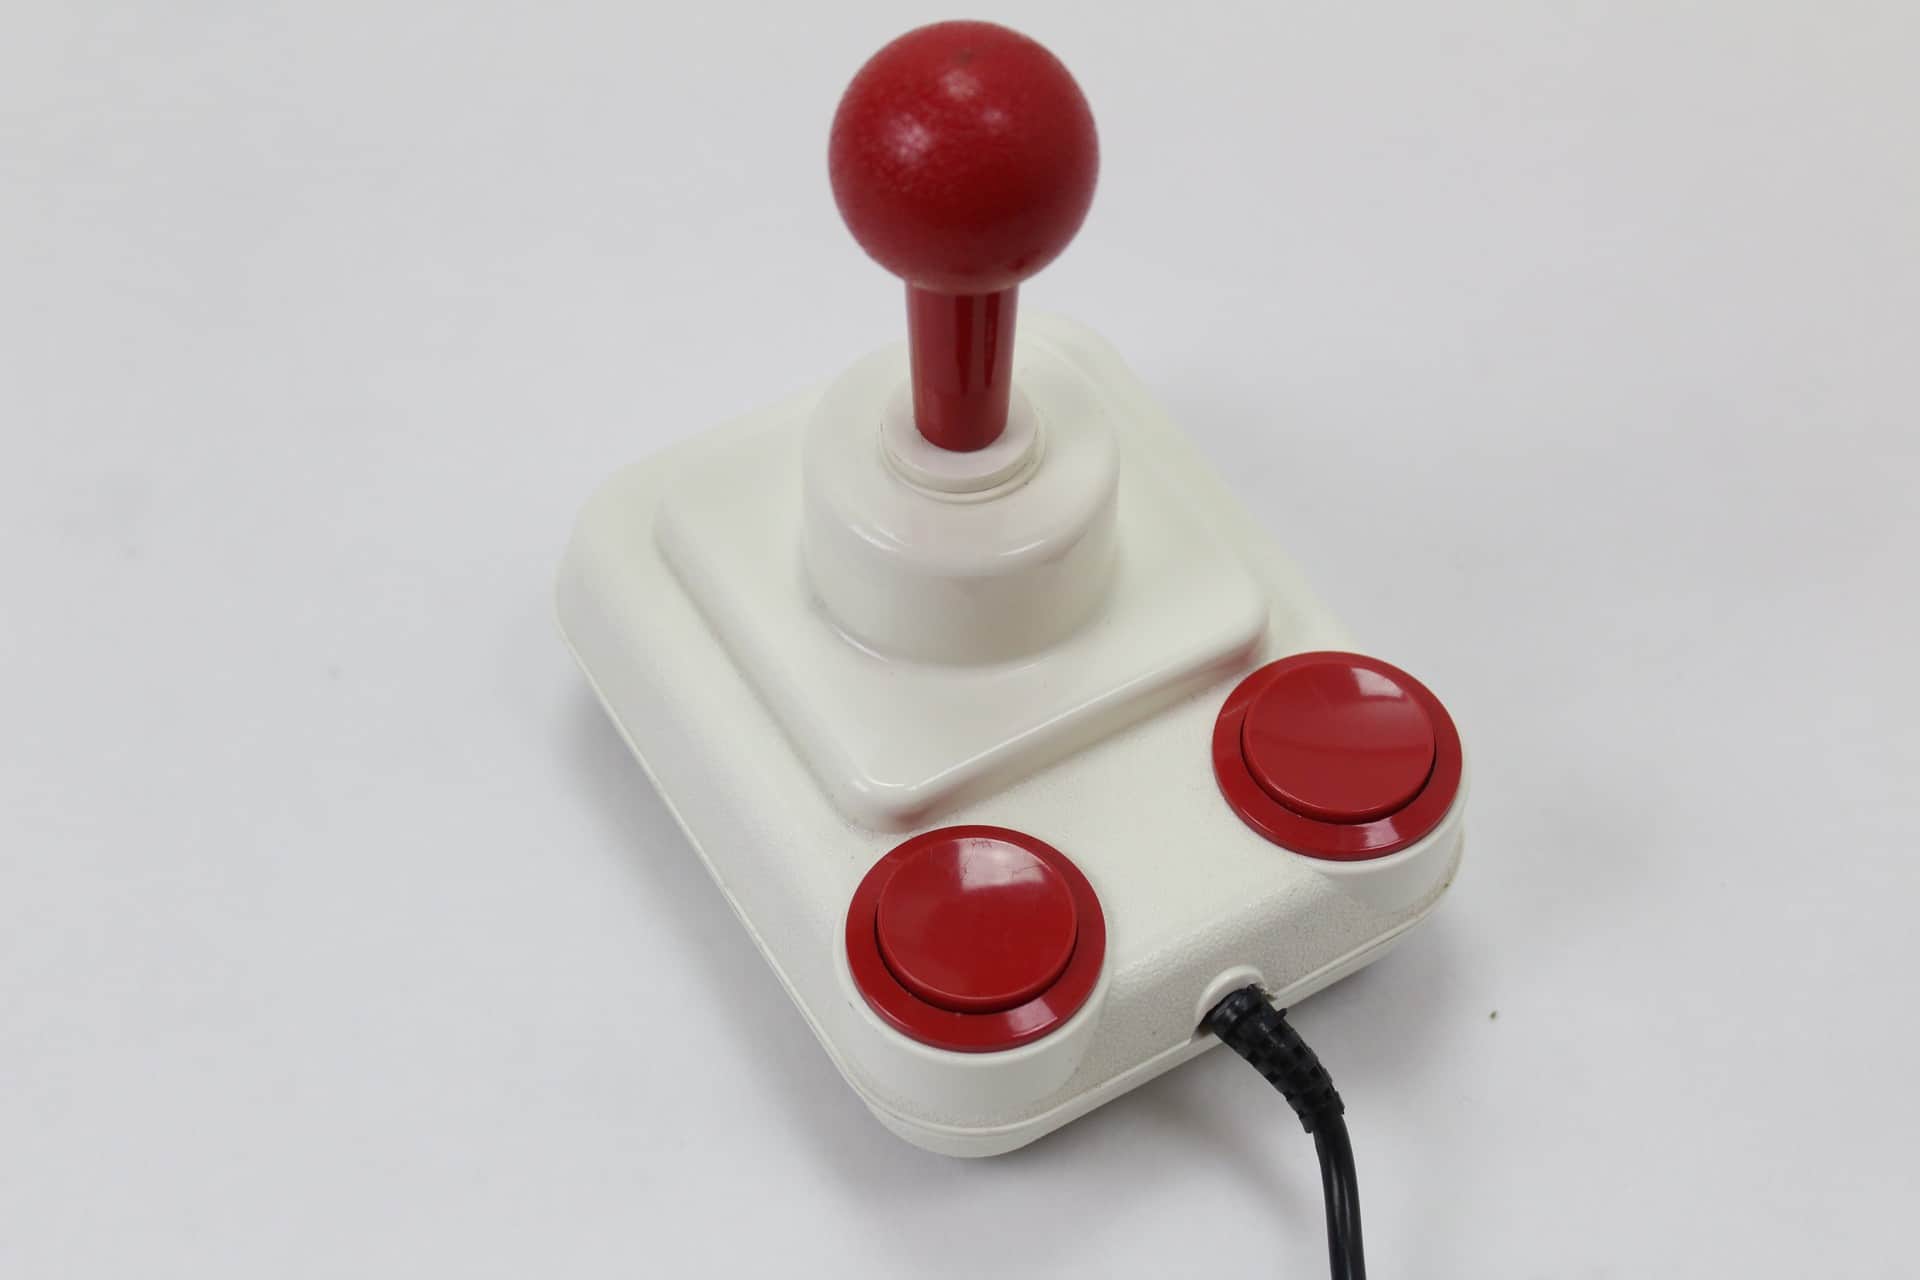 Commodore Amiga 1200 - joystick